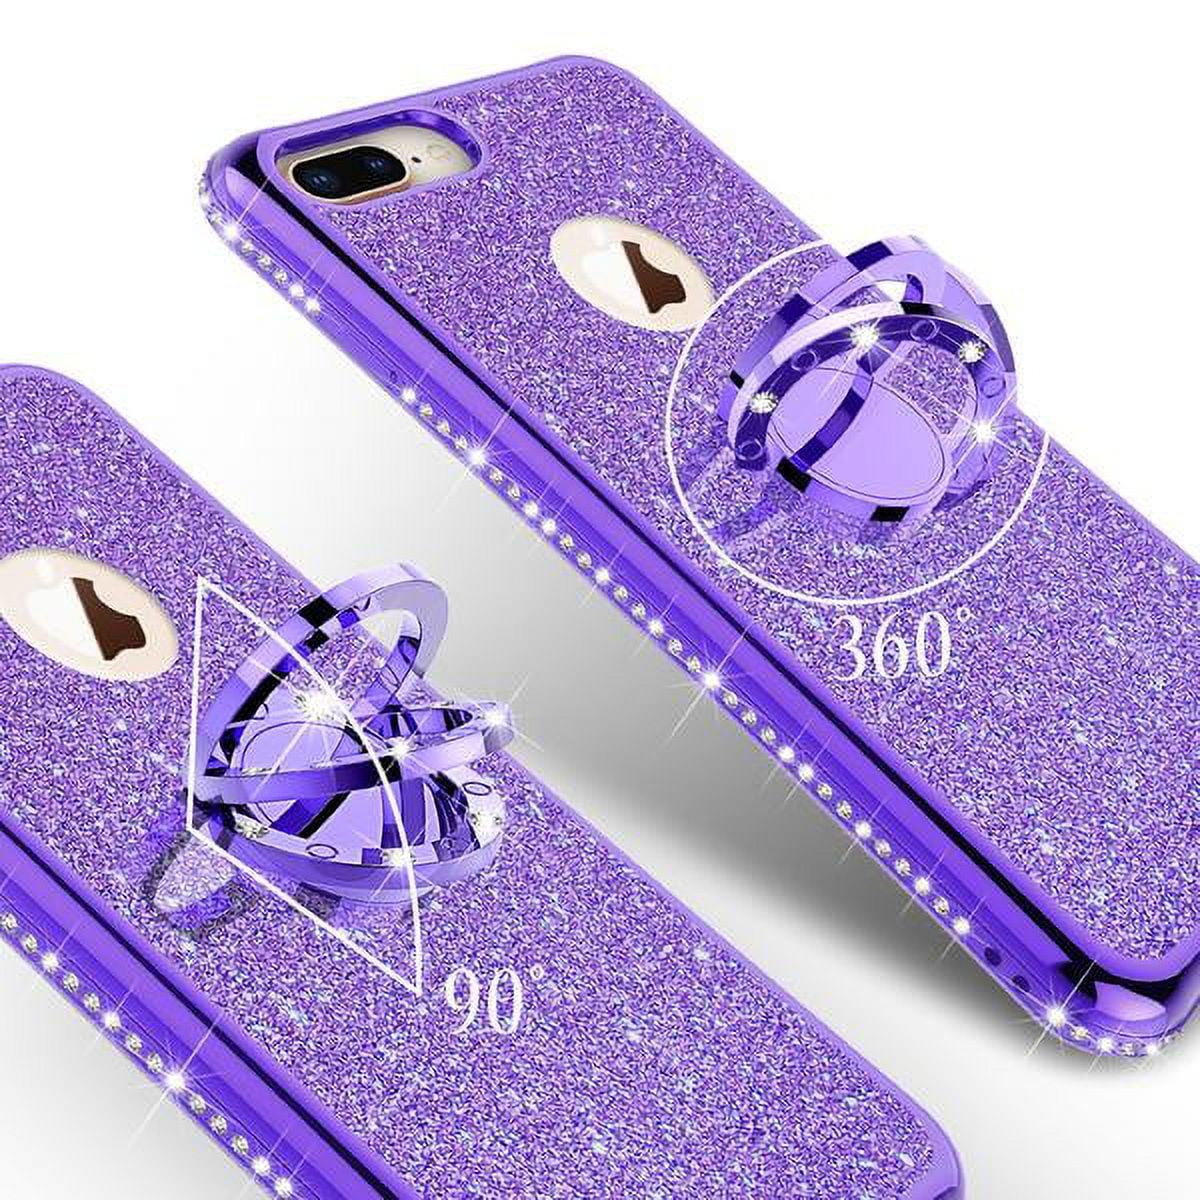 Coverlab Iphone 7 Plus Case, Iphone 8 Plus Case, Liquid Floating Quicksand Glitter Phone Case Girls Kickstand,bling Diamond Bumper Ring Stand Protecti